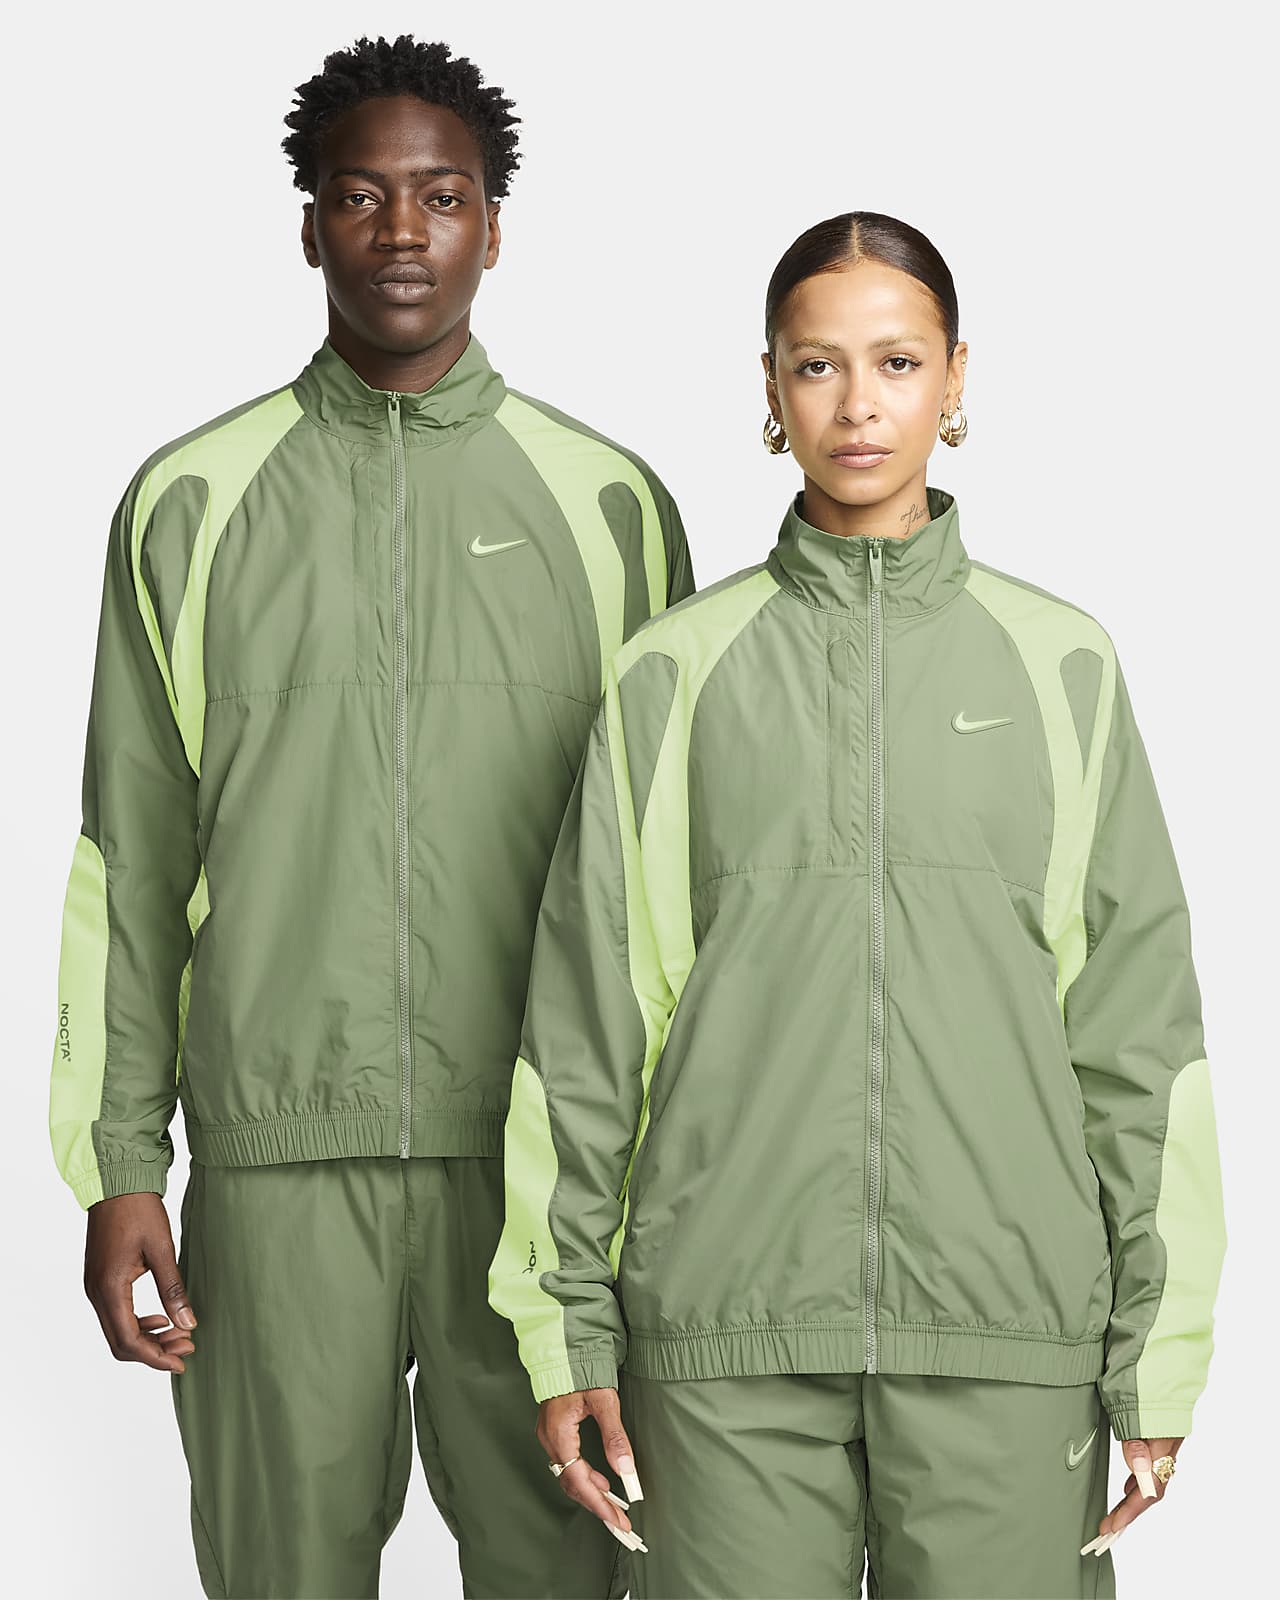 High Quality Fleece Lined Couples Track Jacket Plus Size Baseball